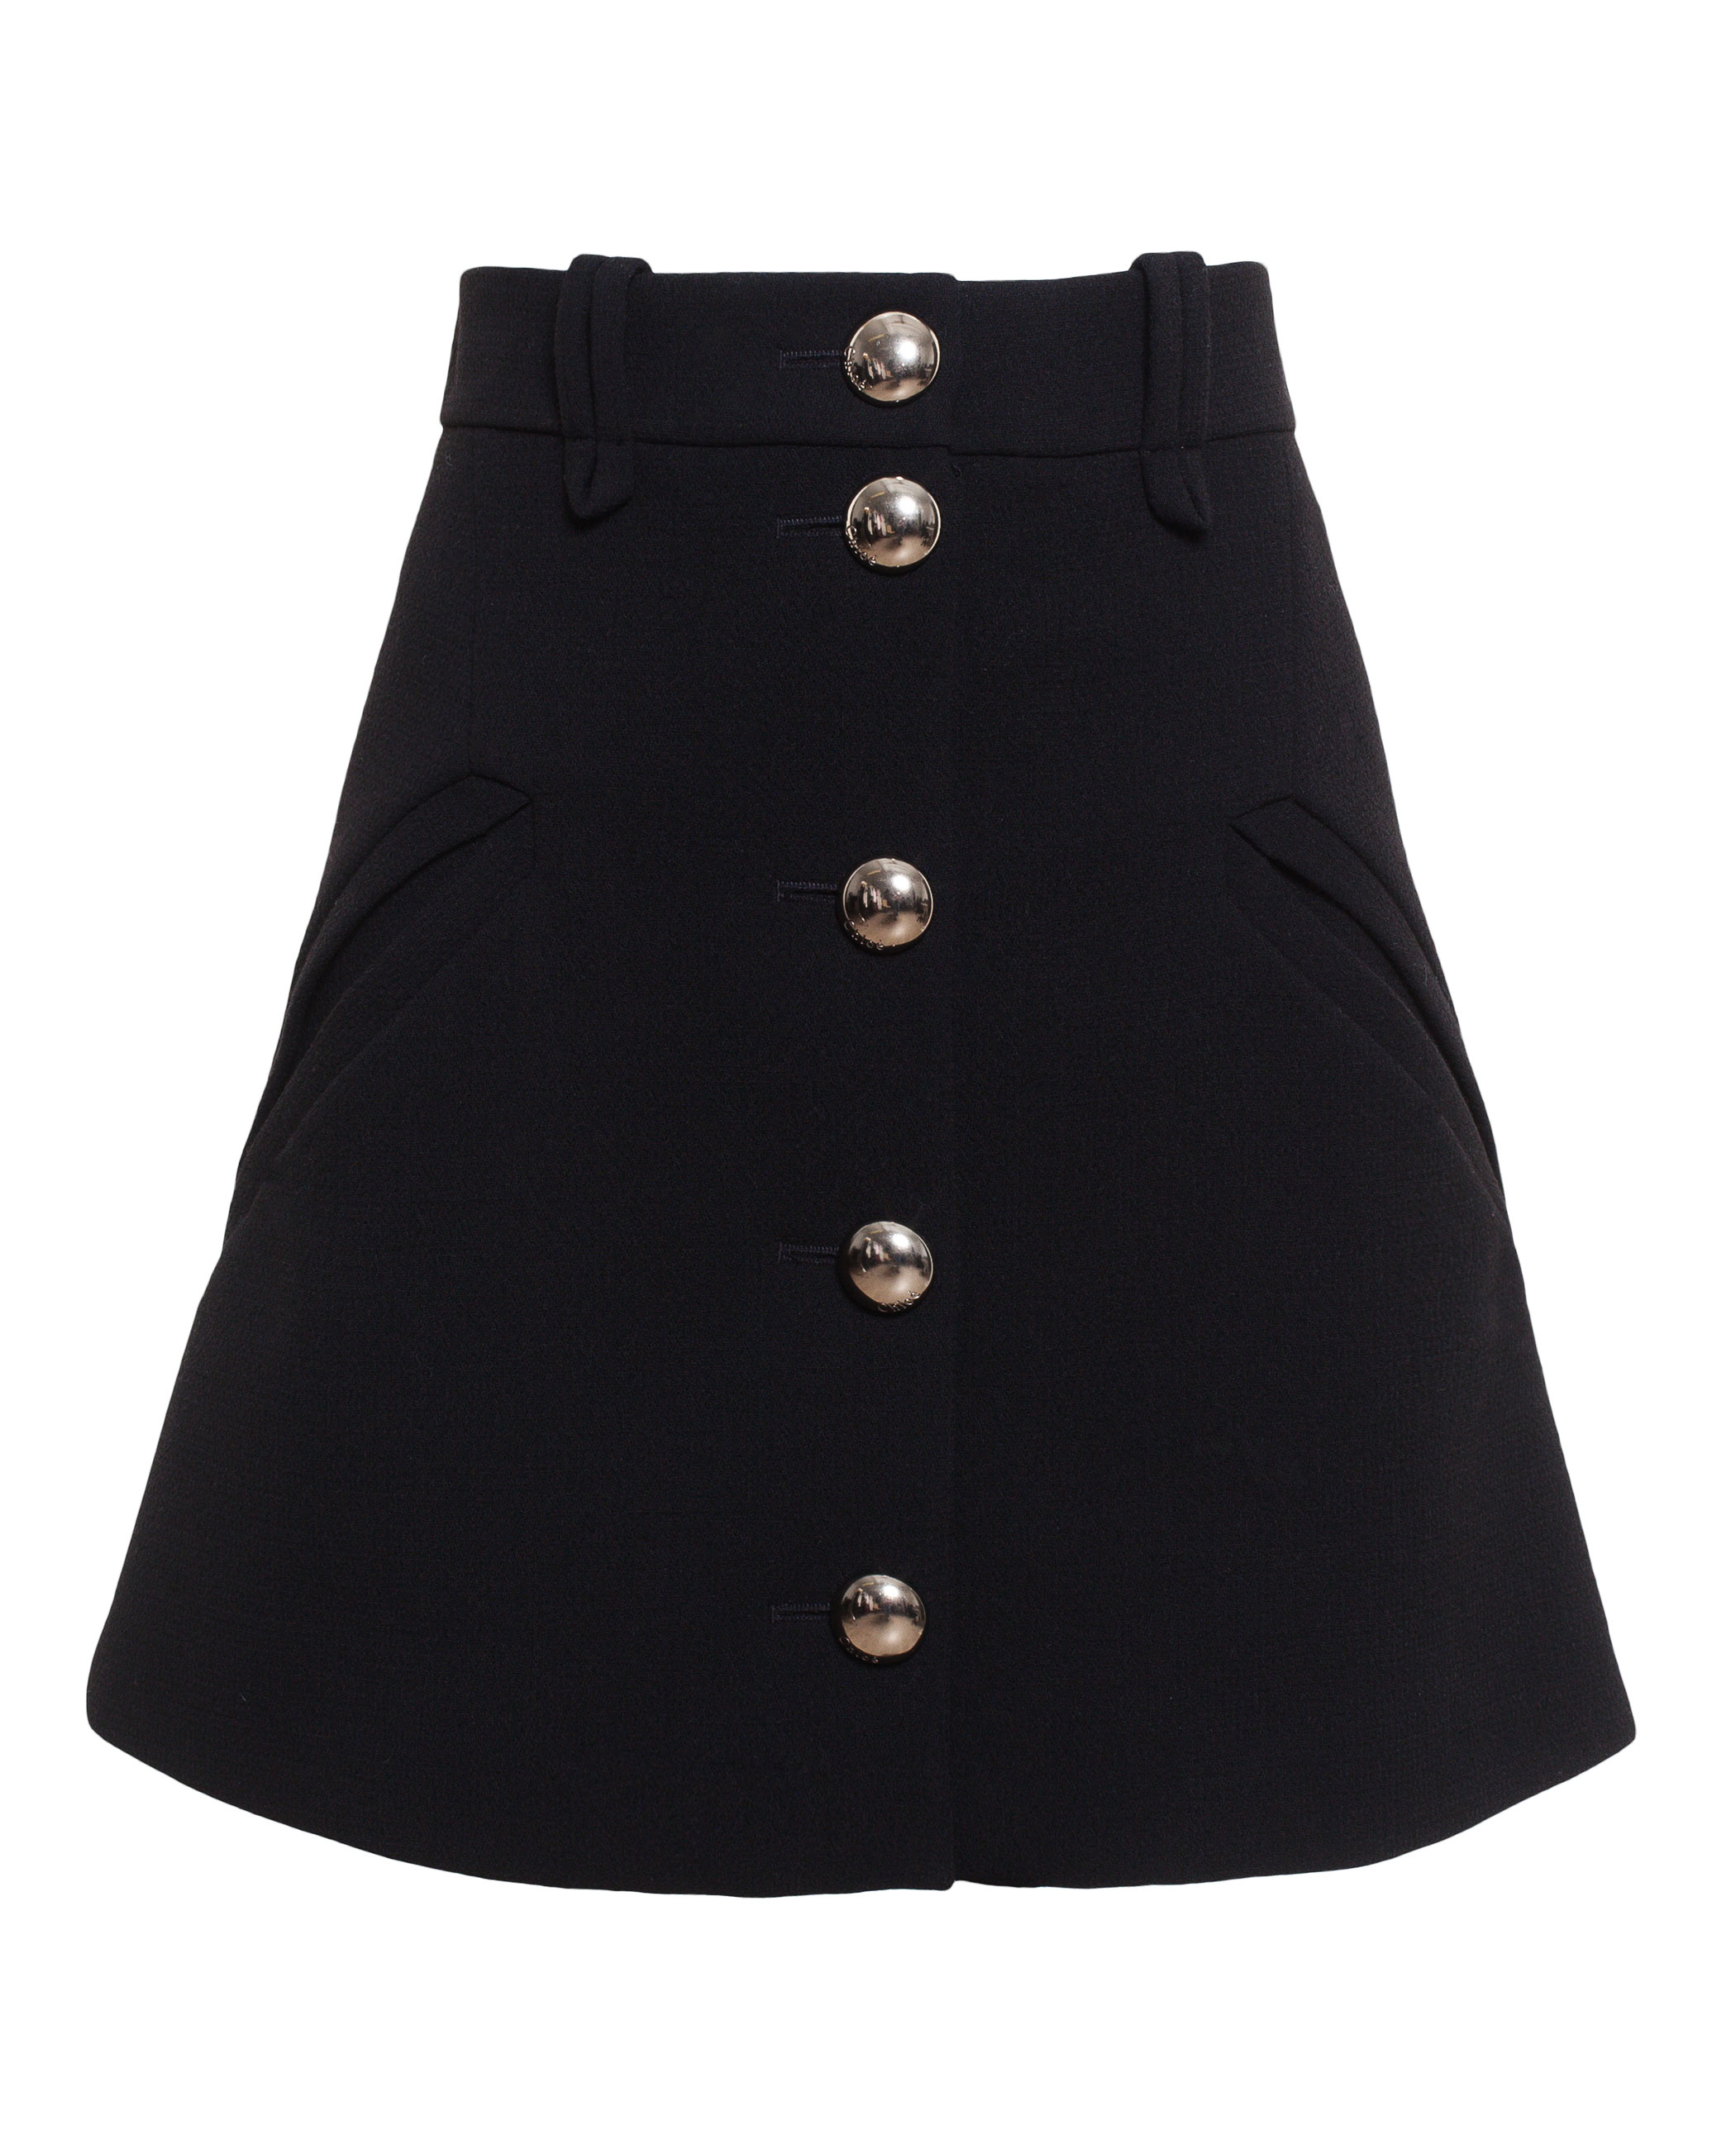 Lyst - Chloé Wool Skirt in Black